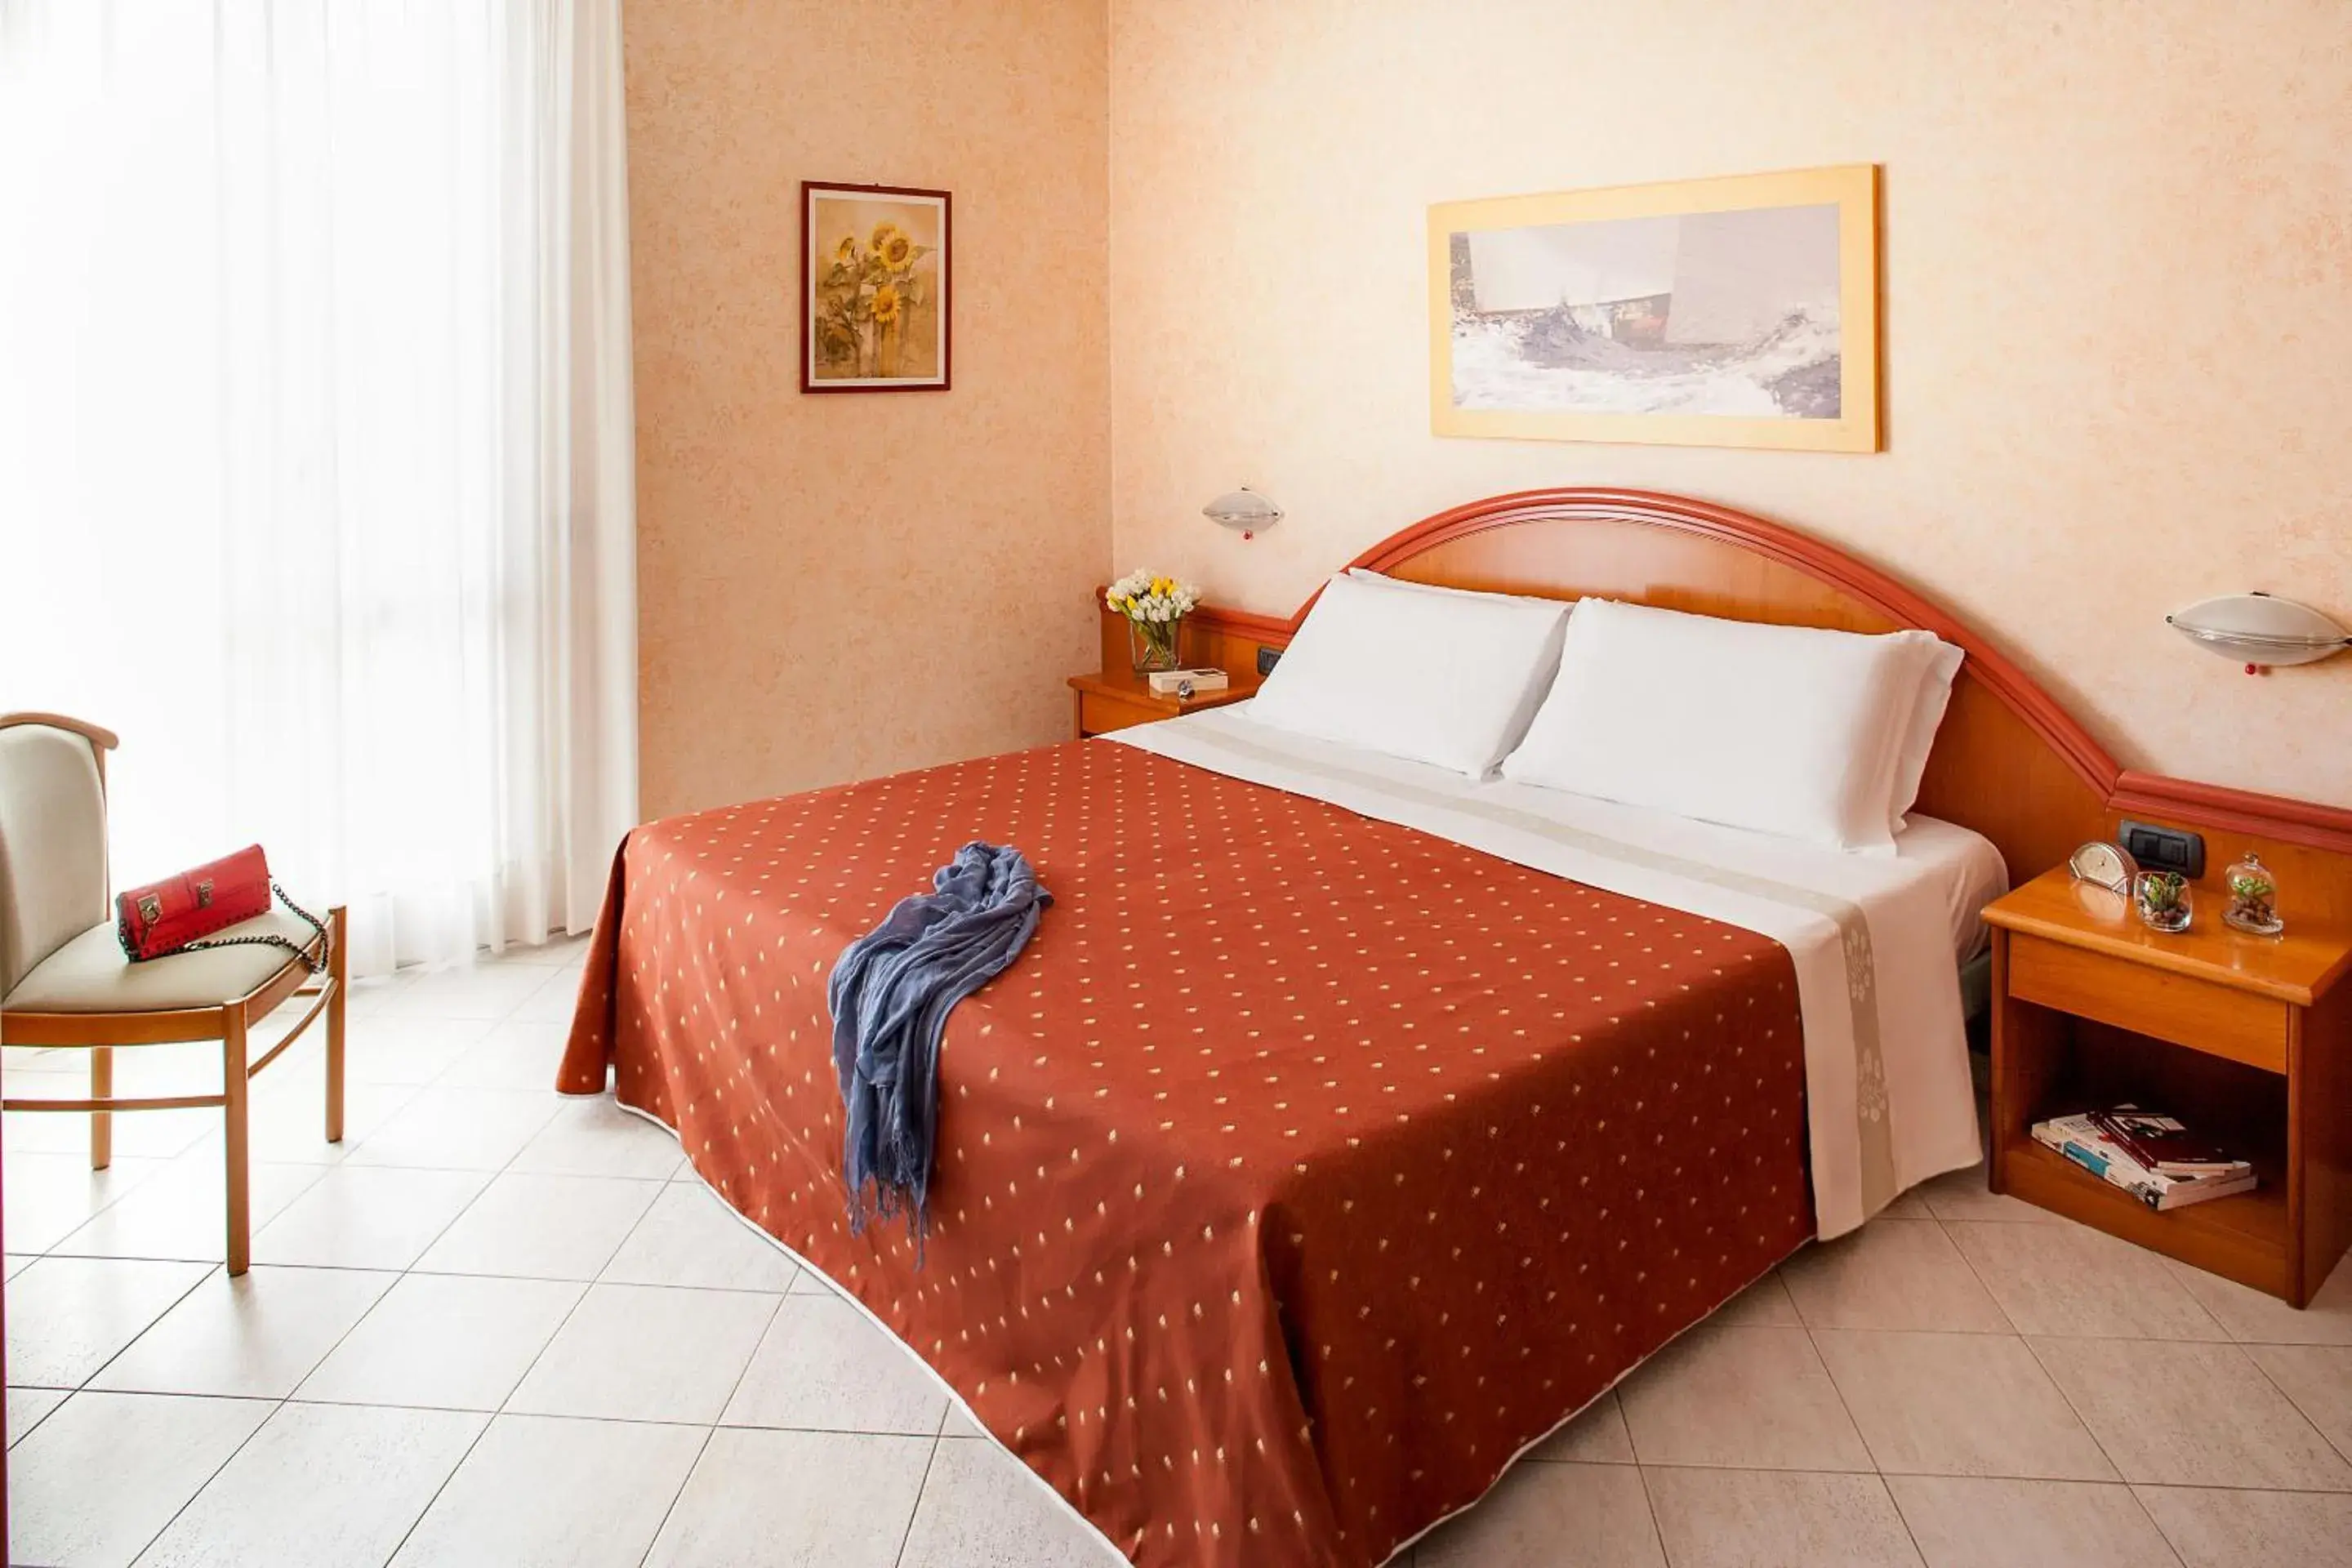 Bed, Room Photo in Hotel Gabriella